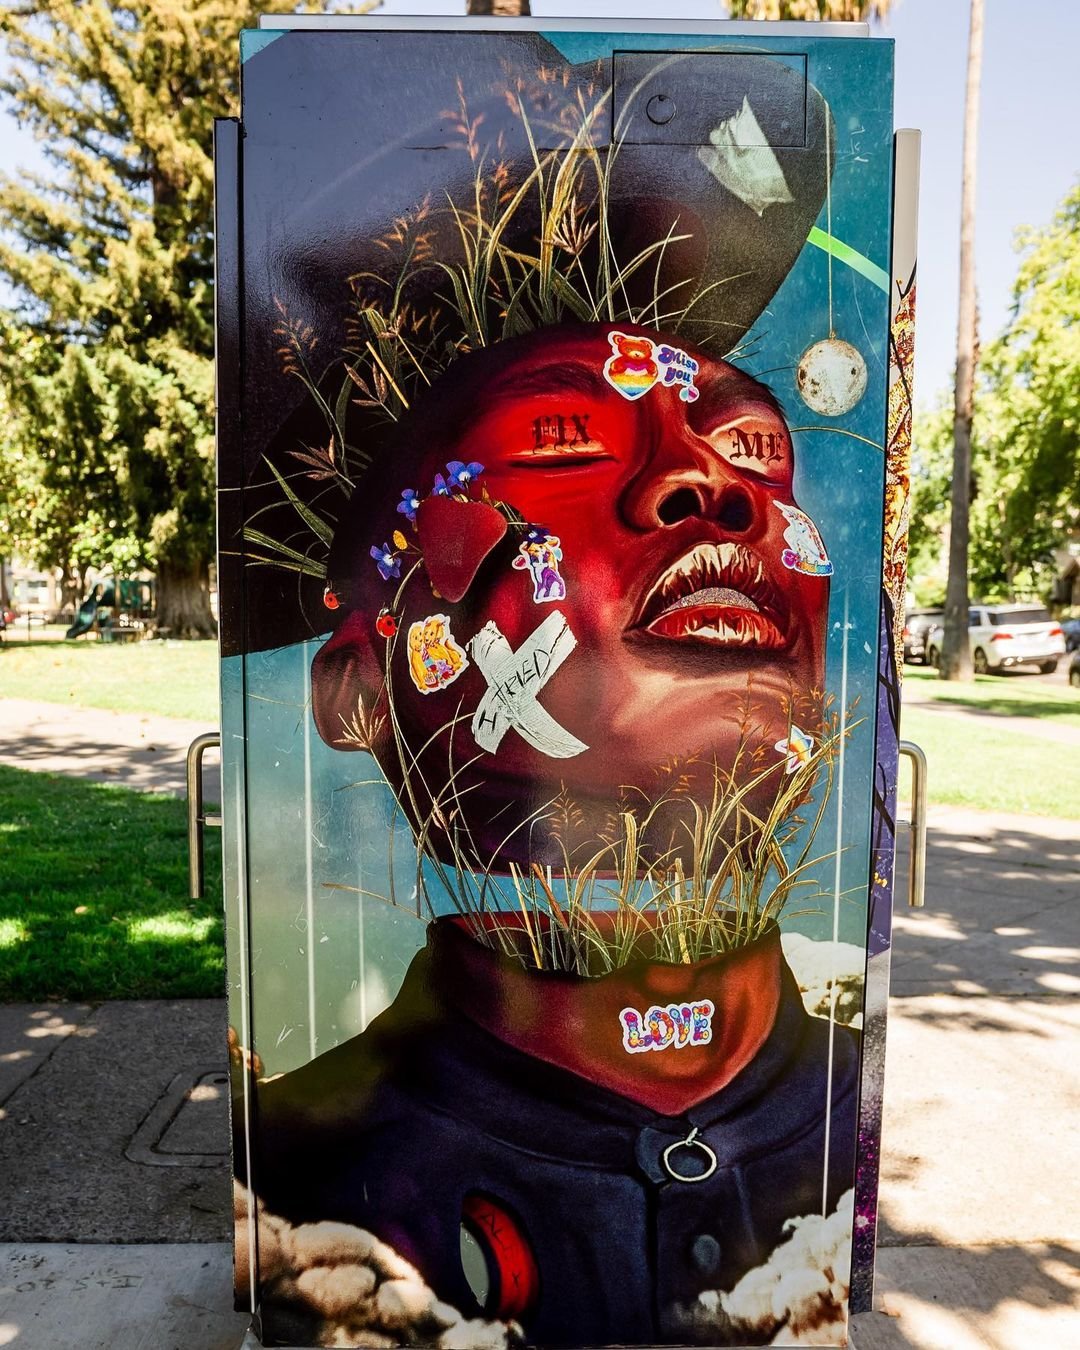 Street-Art-on-Electrical-boxes-by-Brandon-Gastinell-Winn-Park-in-Sacramento-California-3-Photo-by-xsession-.jpg